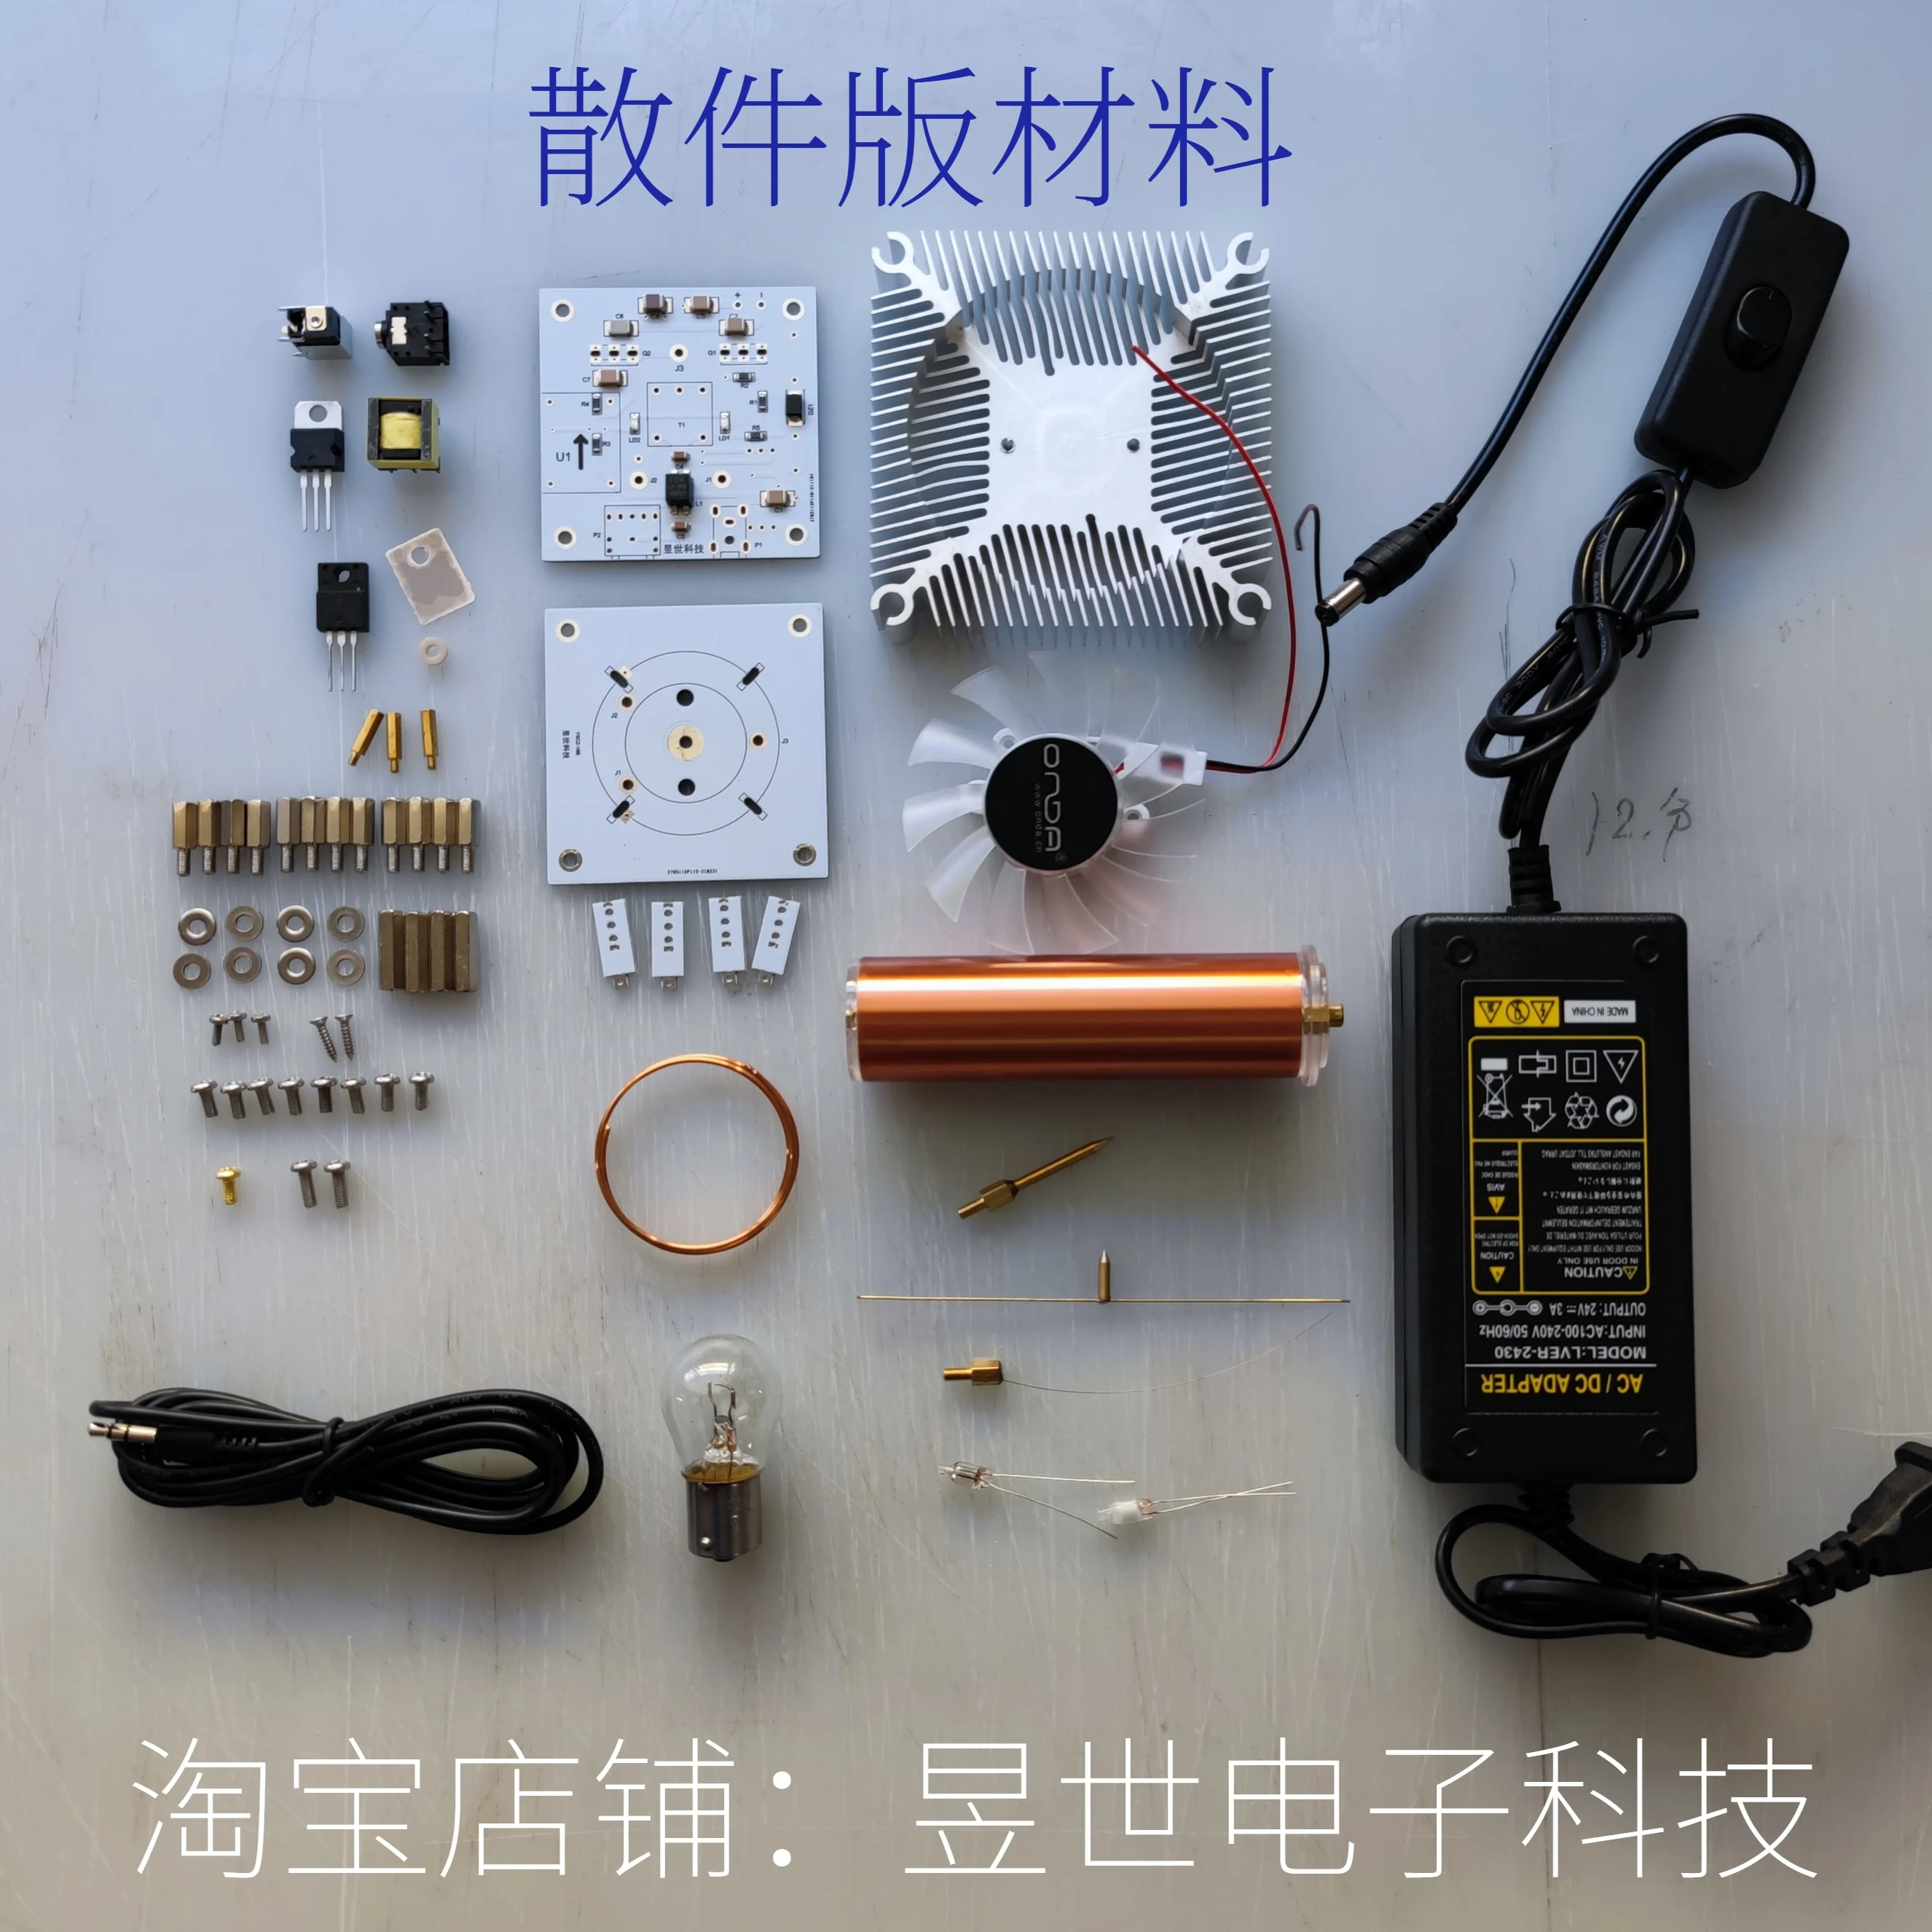 (Parts) Music Tesla Coil Space Lighting Plasma Speaker Electronic Technology DIY Production